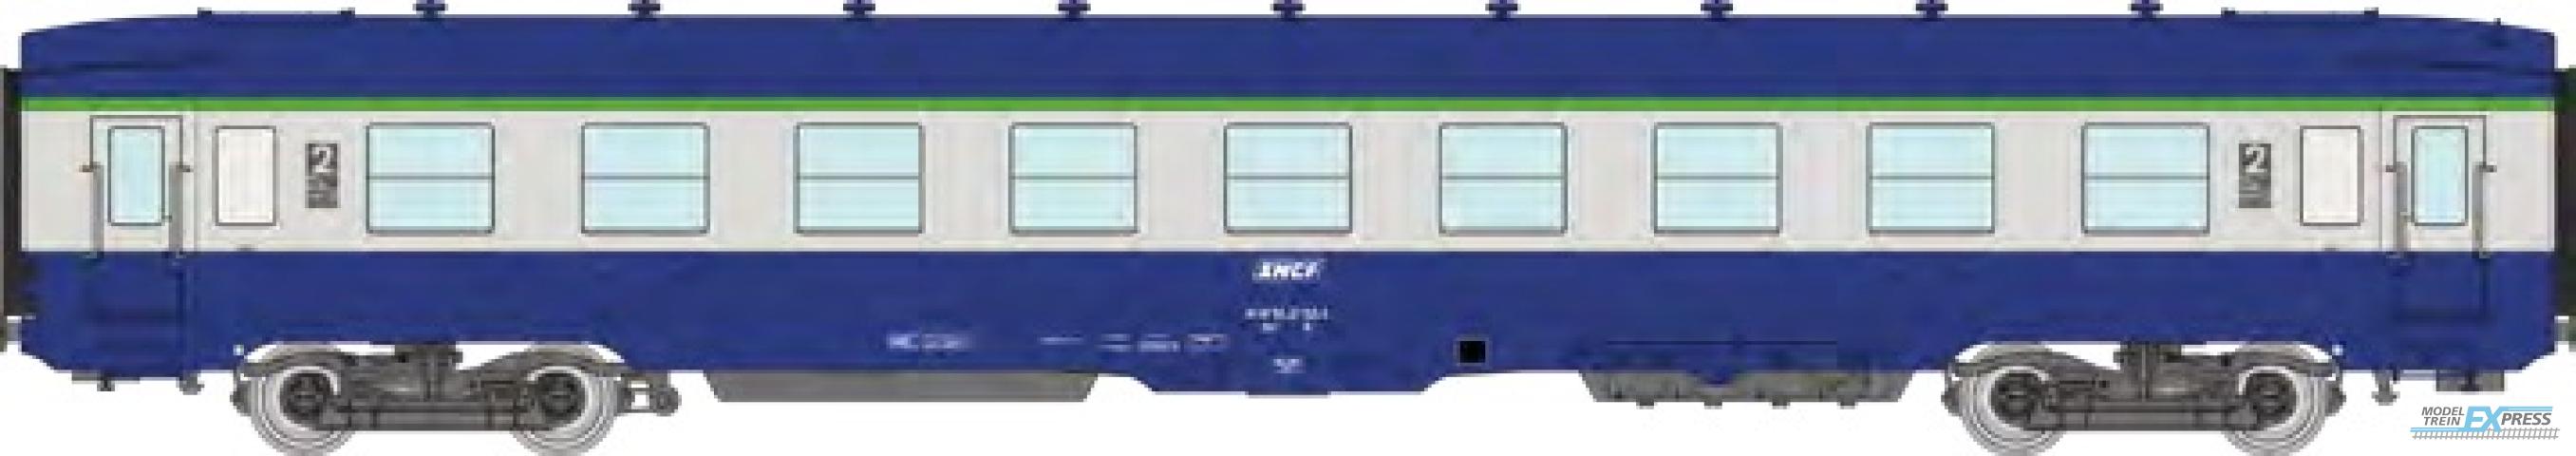 REE models VB-404 U52 DEV AO Sleeping Cars B9c9 N° 50 87 59-37 160-4 Blue/Grey, boxed SNCF logo Era IV-V